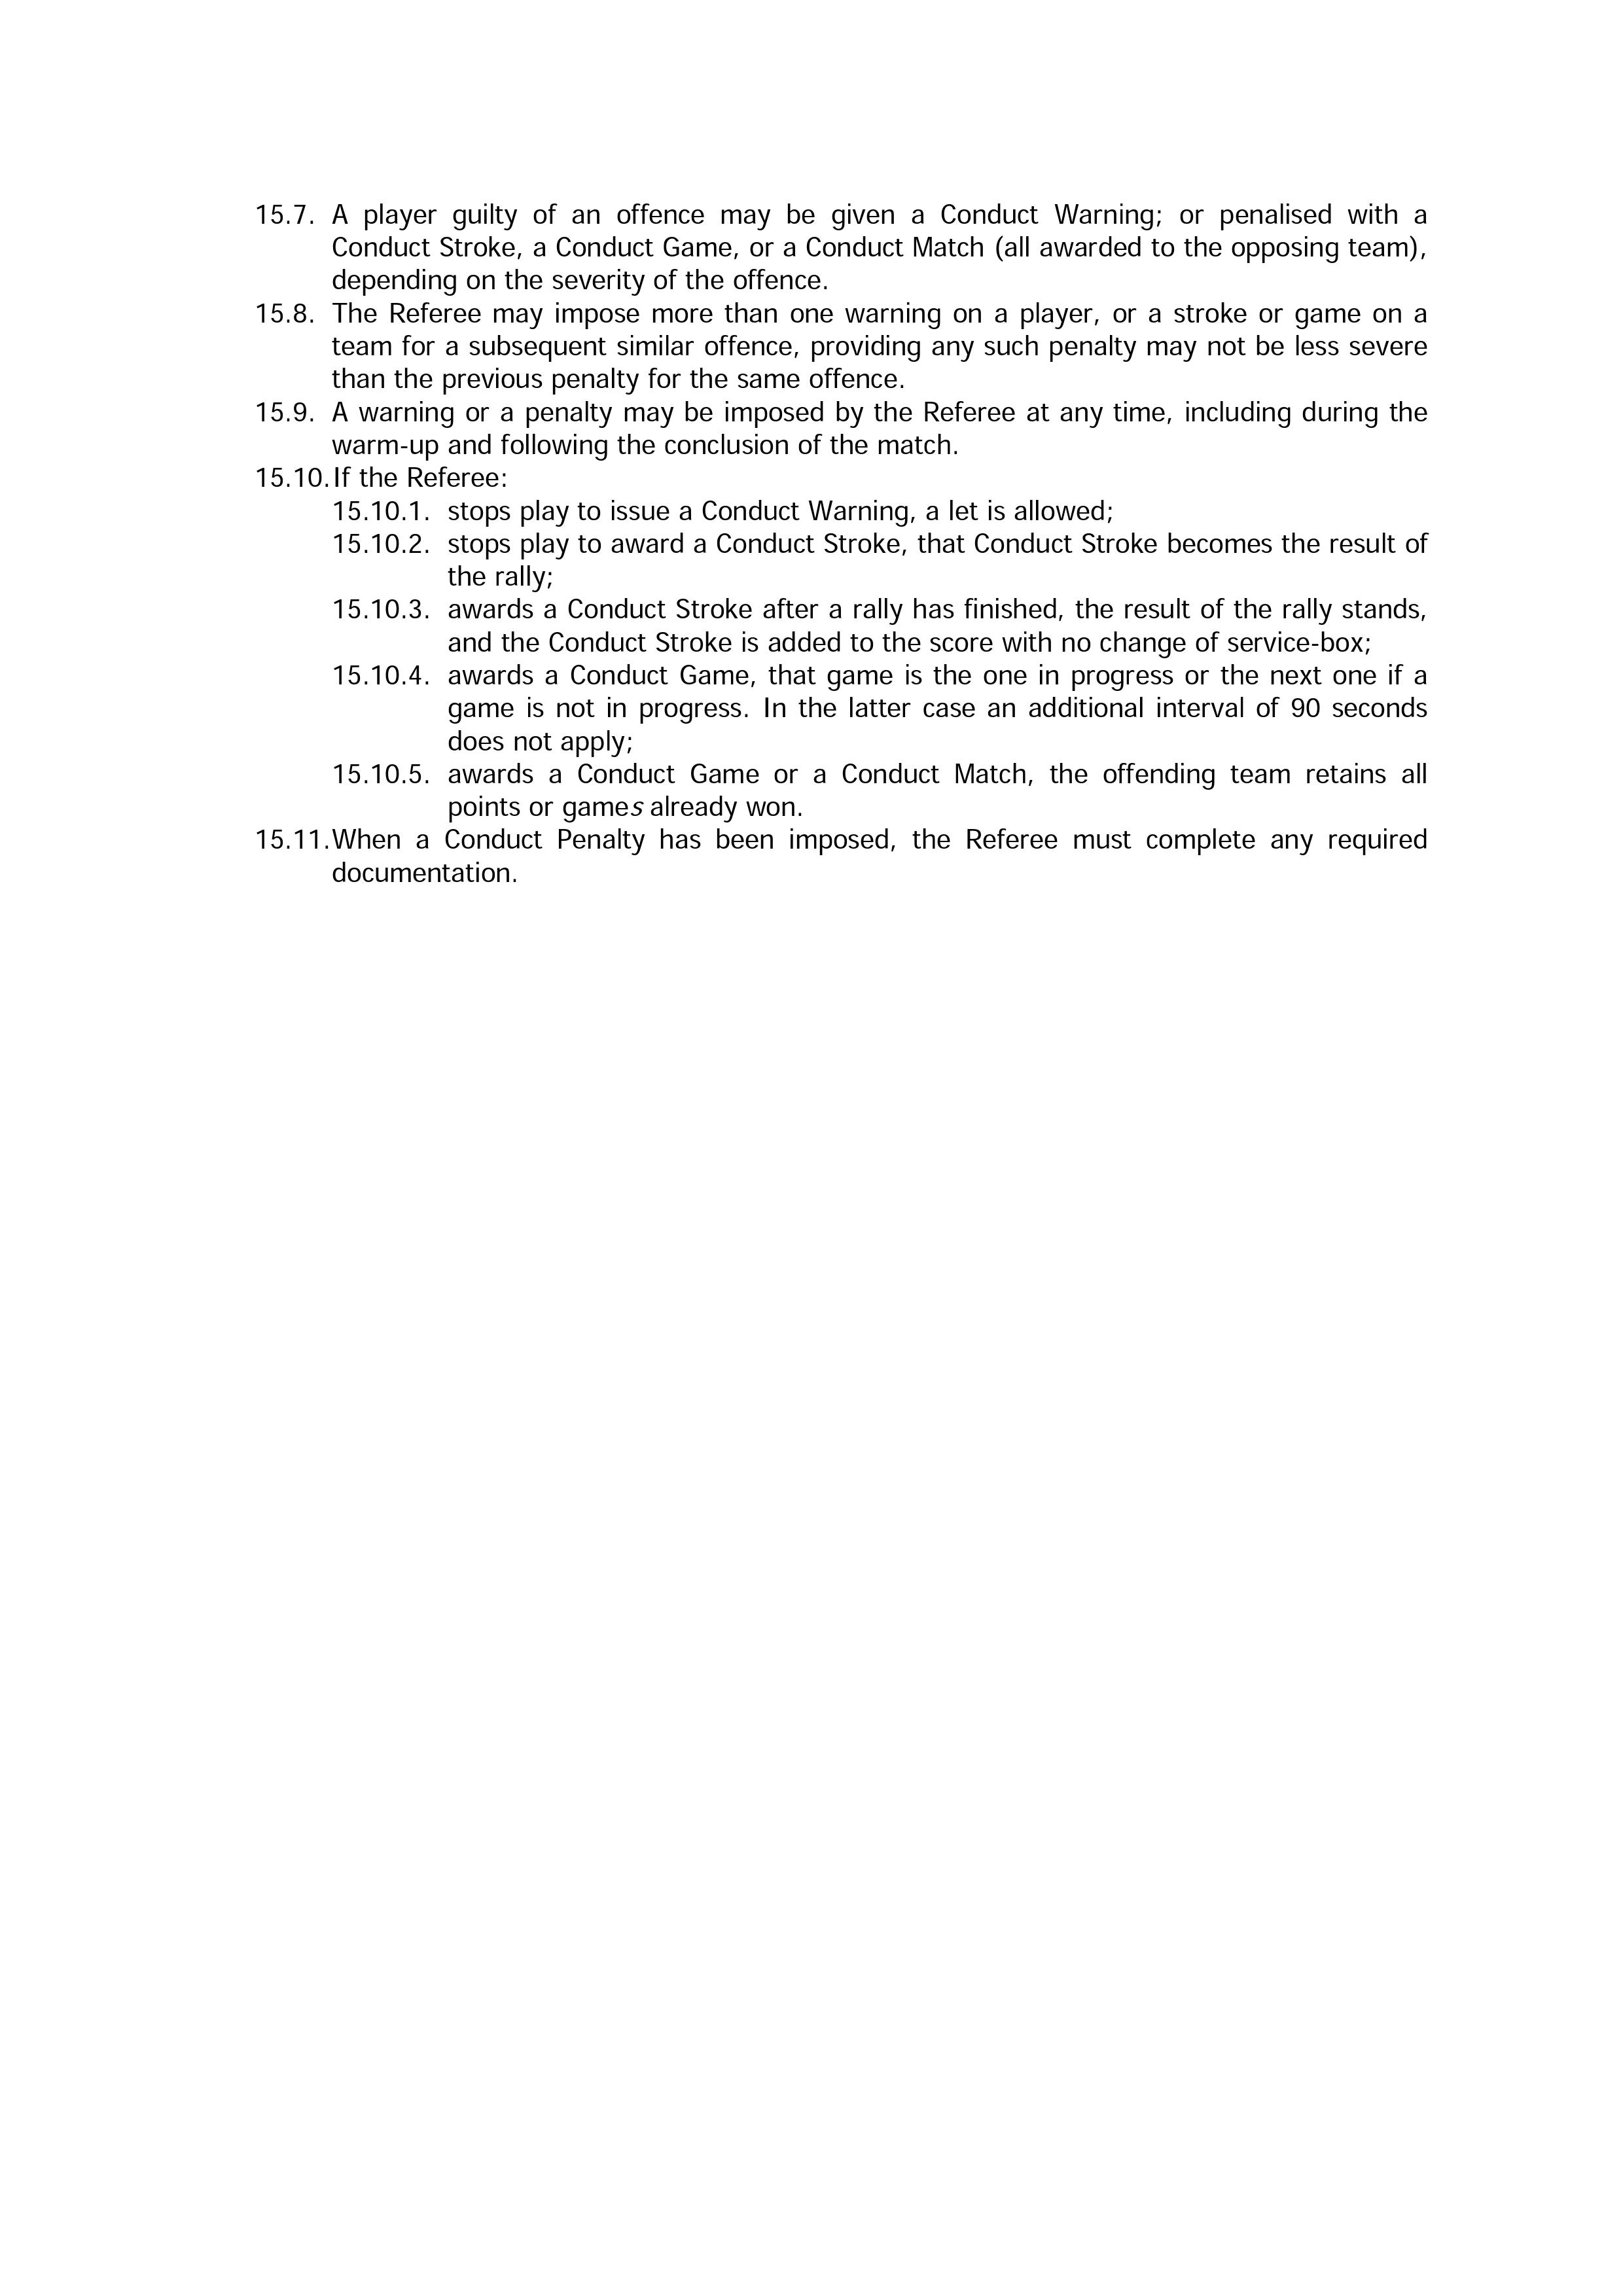 World Squash Federation Doubles Rules - Global Squash Coach - Page 11.jpg